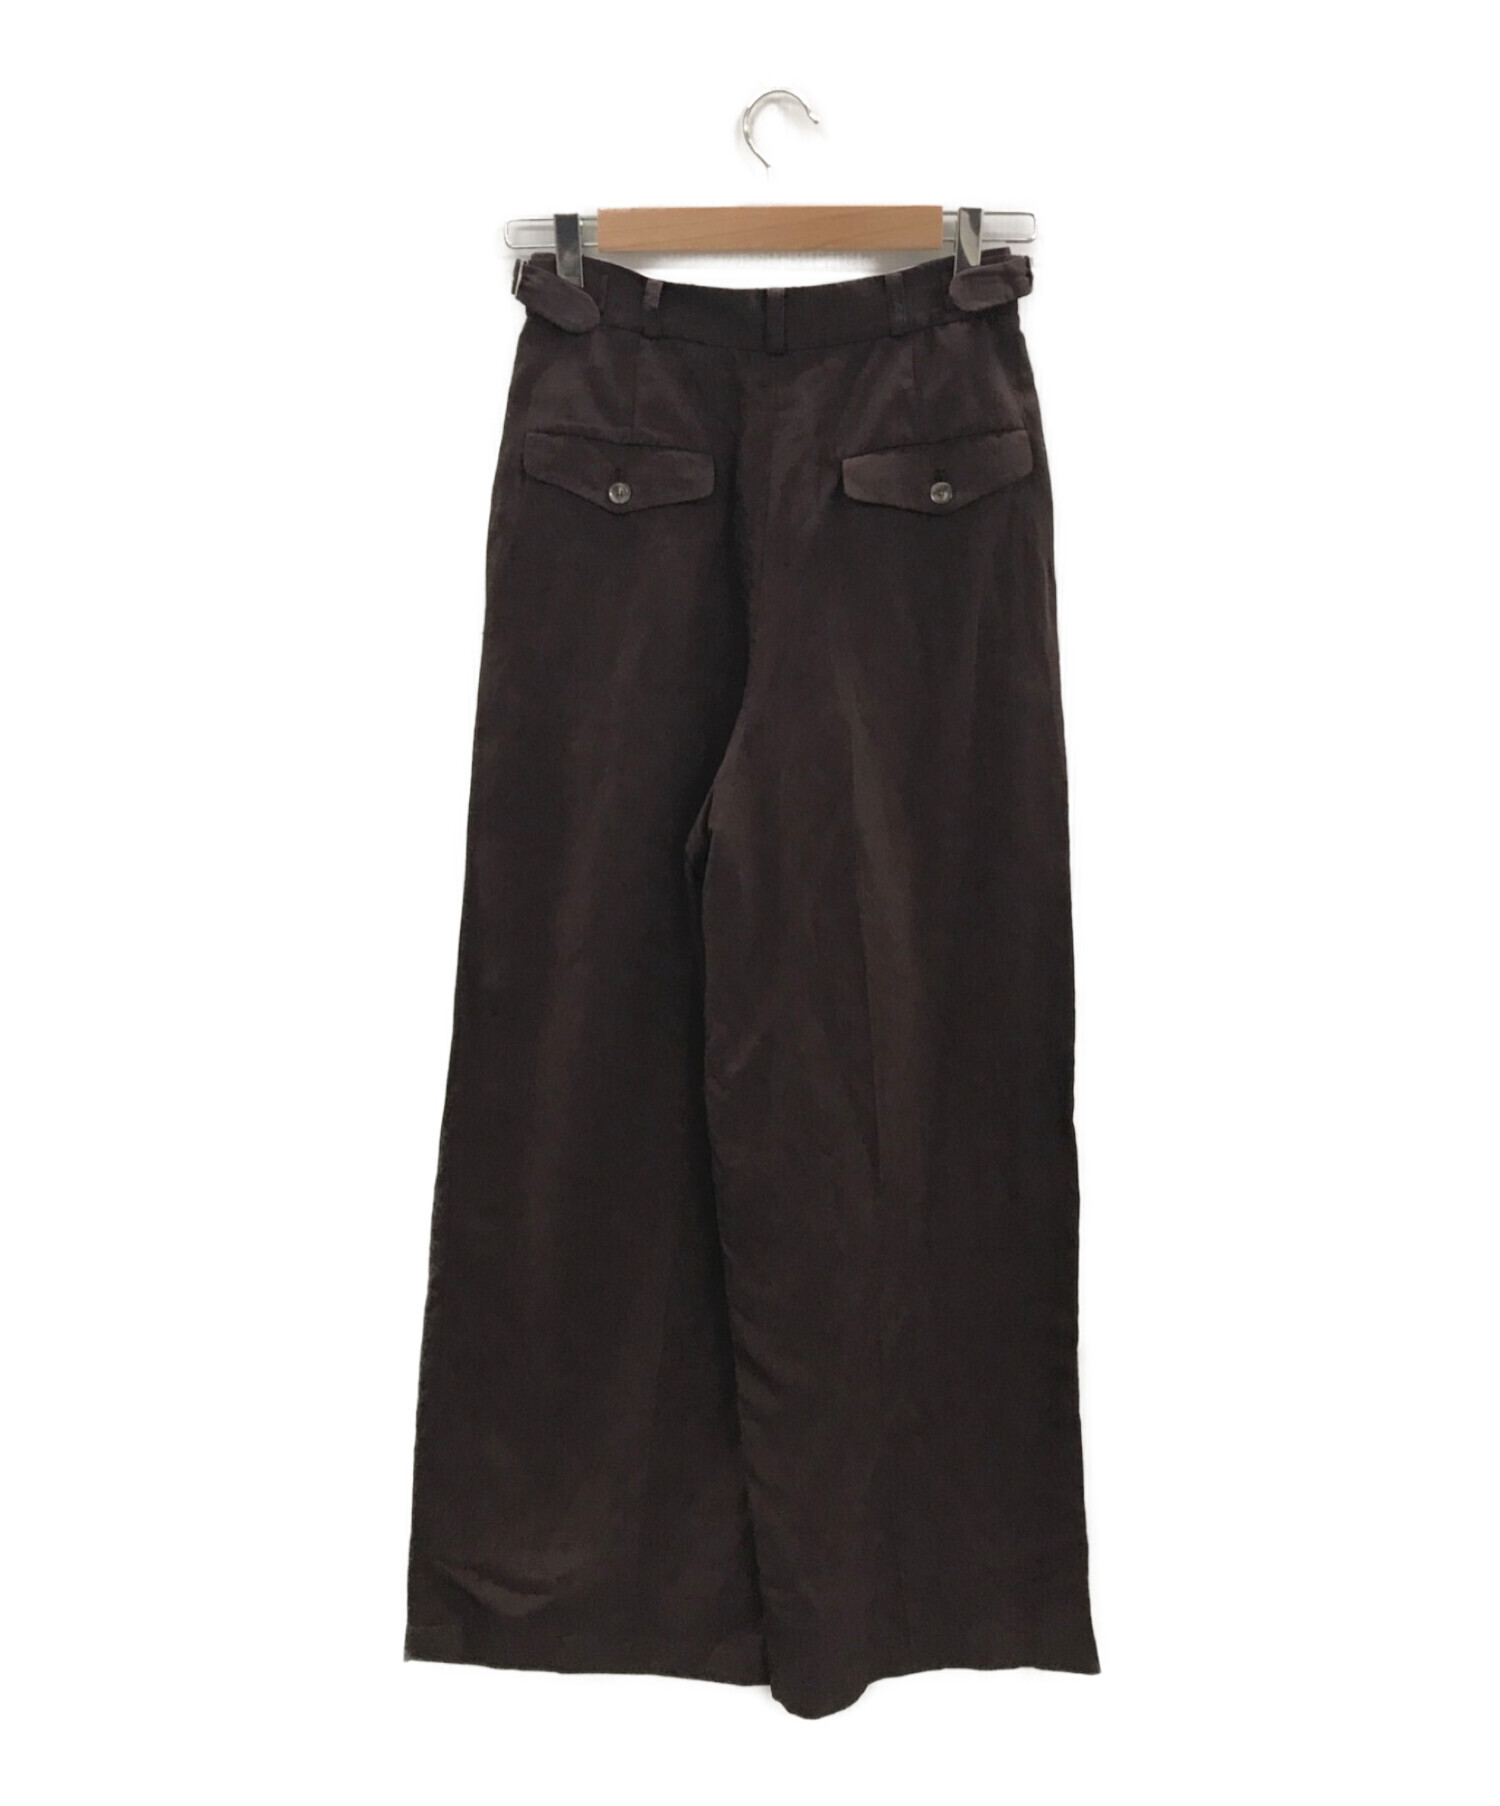 TODAYFUL (トゥデイフル) Linen Gurka Pants ブラウン サイズ:38